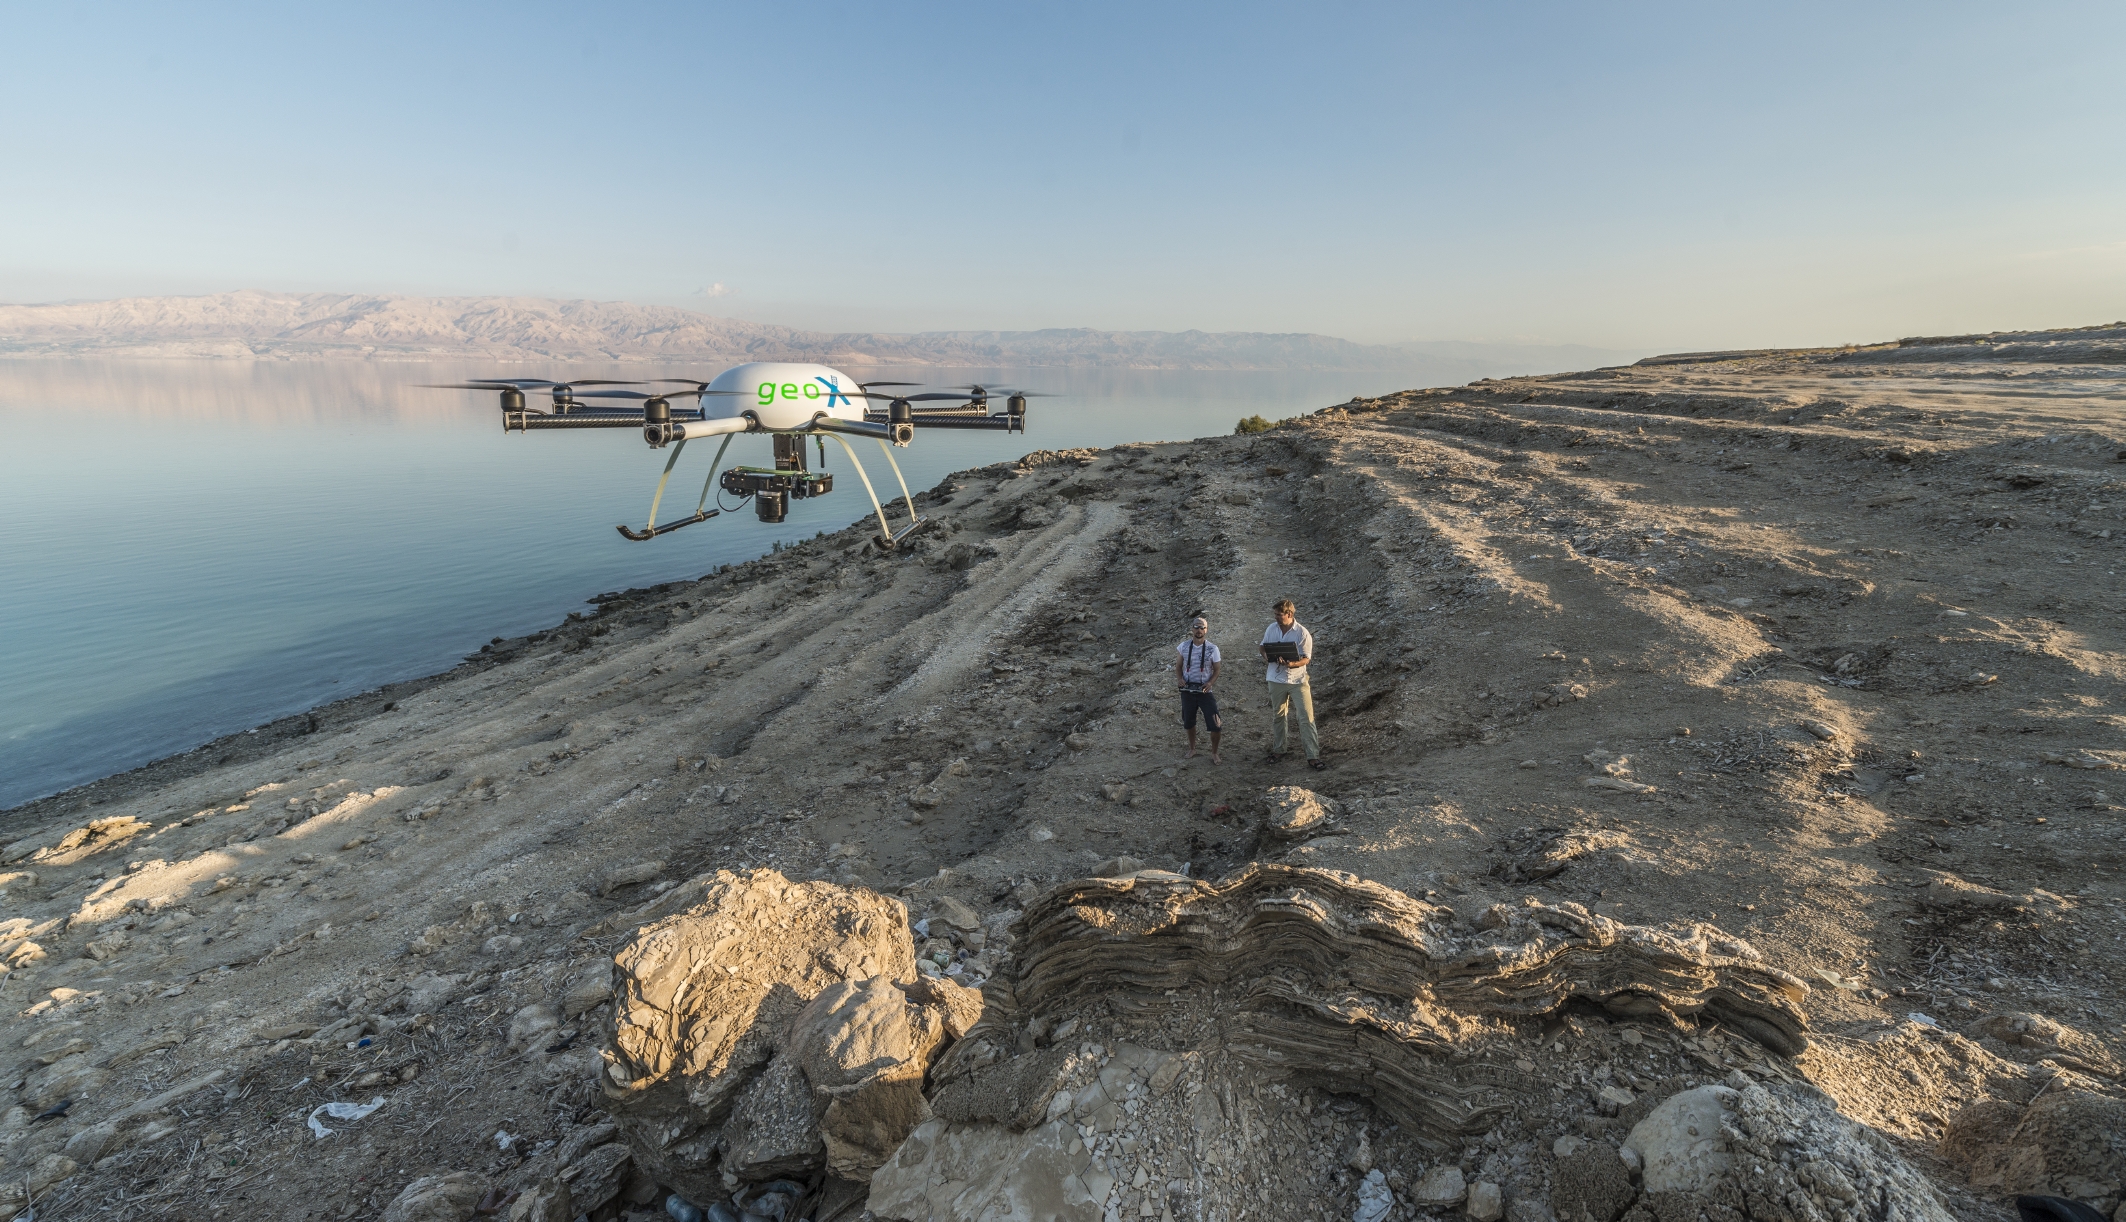 UAV at the Dead Sea (c) Andre Künzelmann